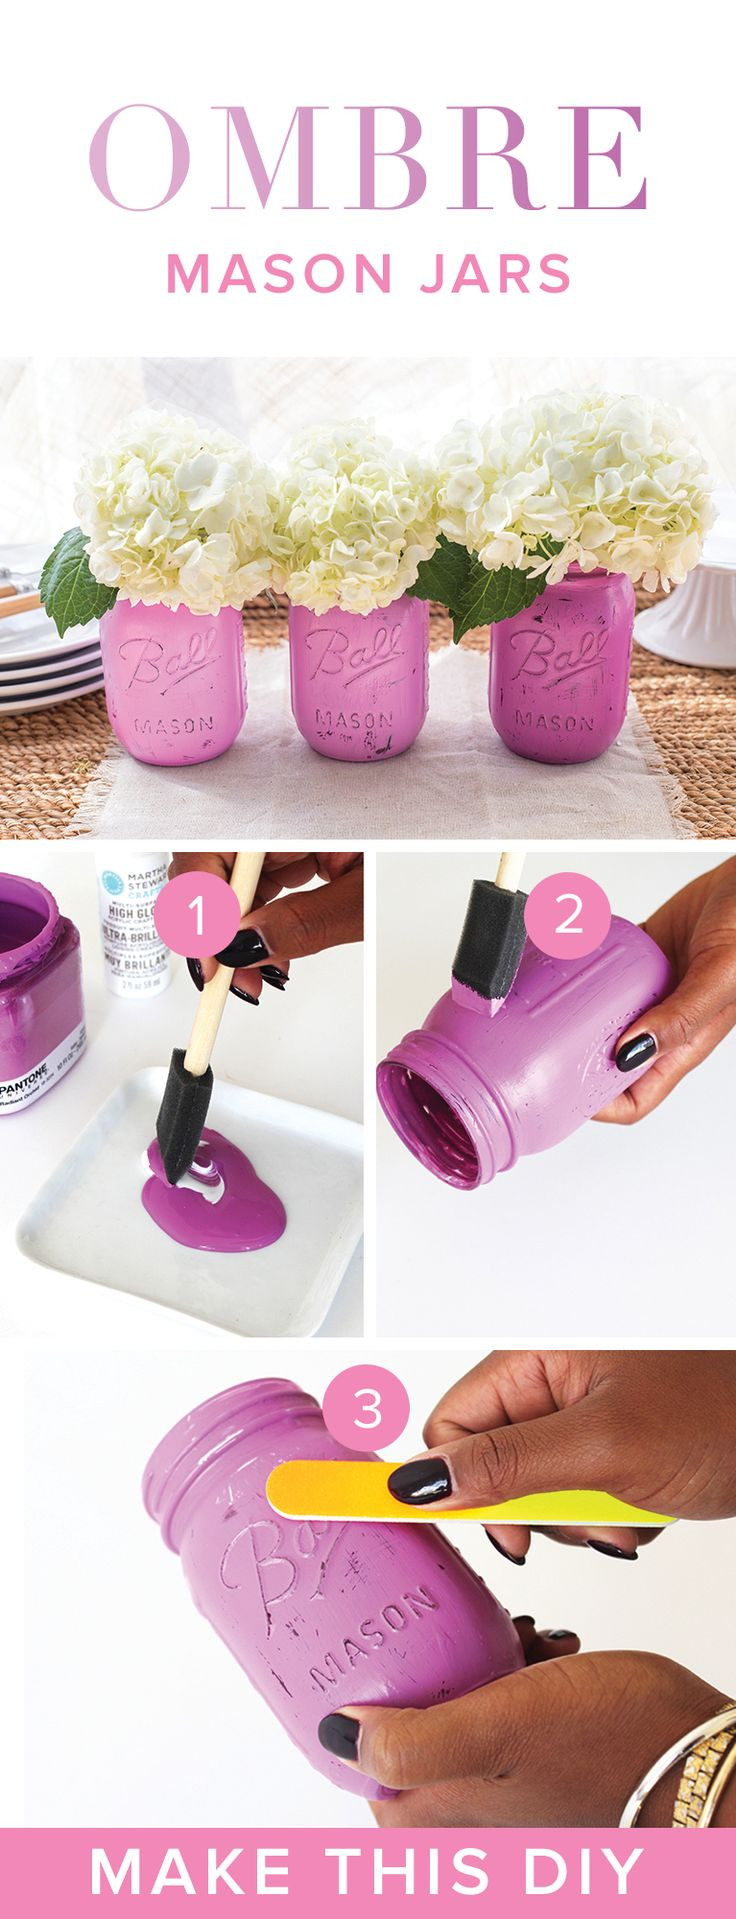 Best ideas about DIY Craft Ideas
. Save or Pin Ten Inspirational DIY Mason Jar Ideas For Weddings Now.